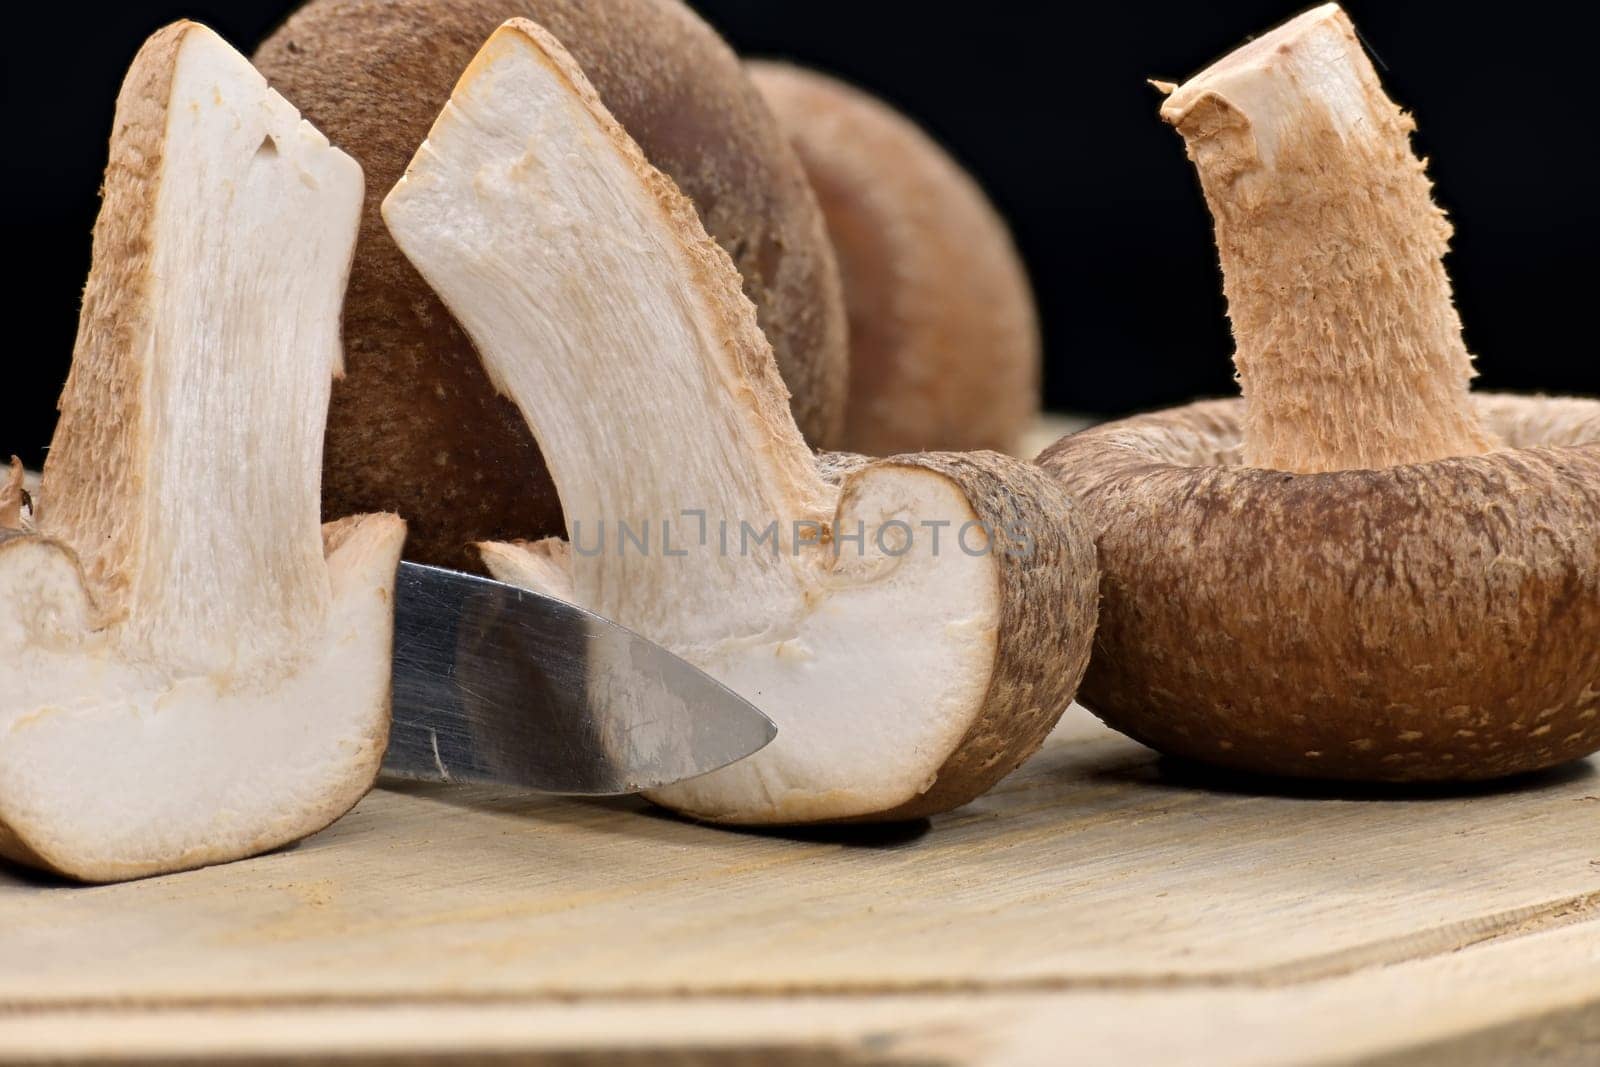 Fresh shiitake mushrooms on cutting board, one mushroom are cut, revealing their white interior, nutritional and medicinal, Lentinula edodes